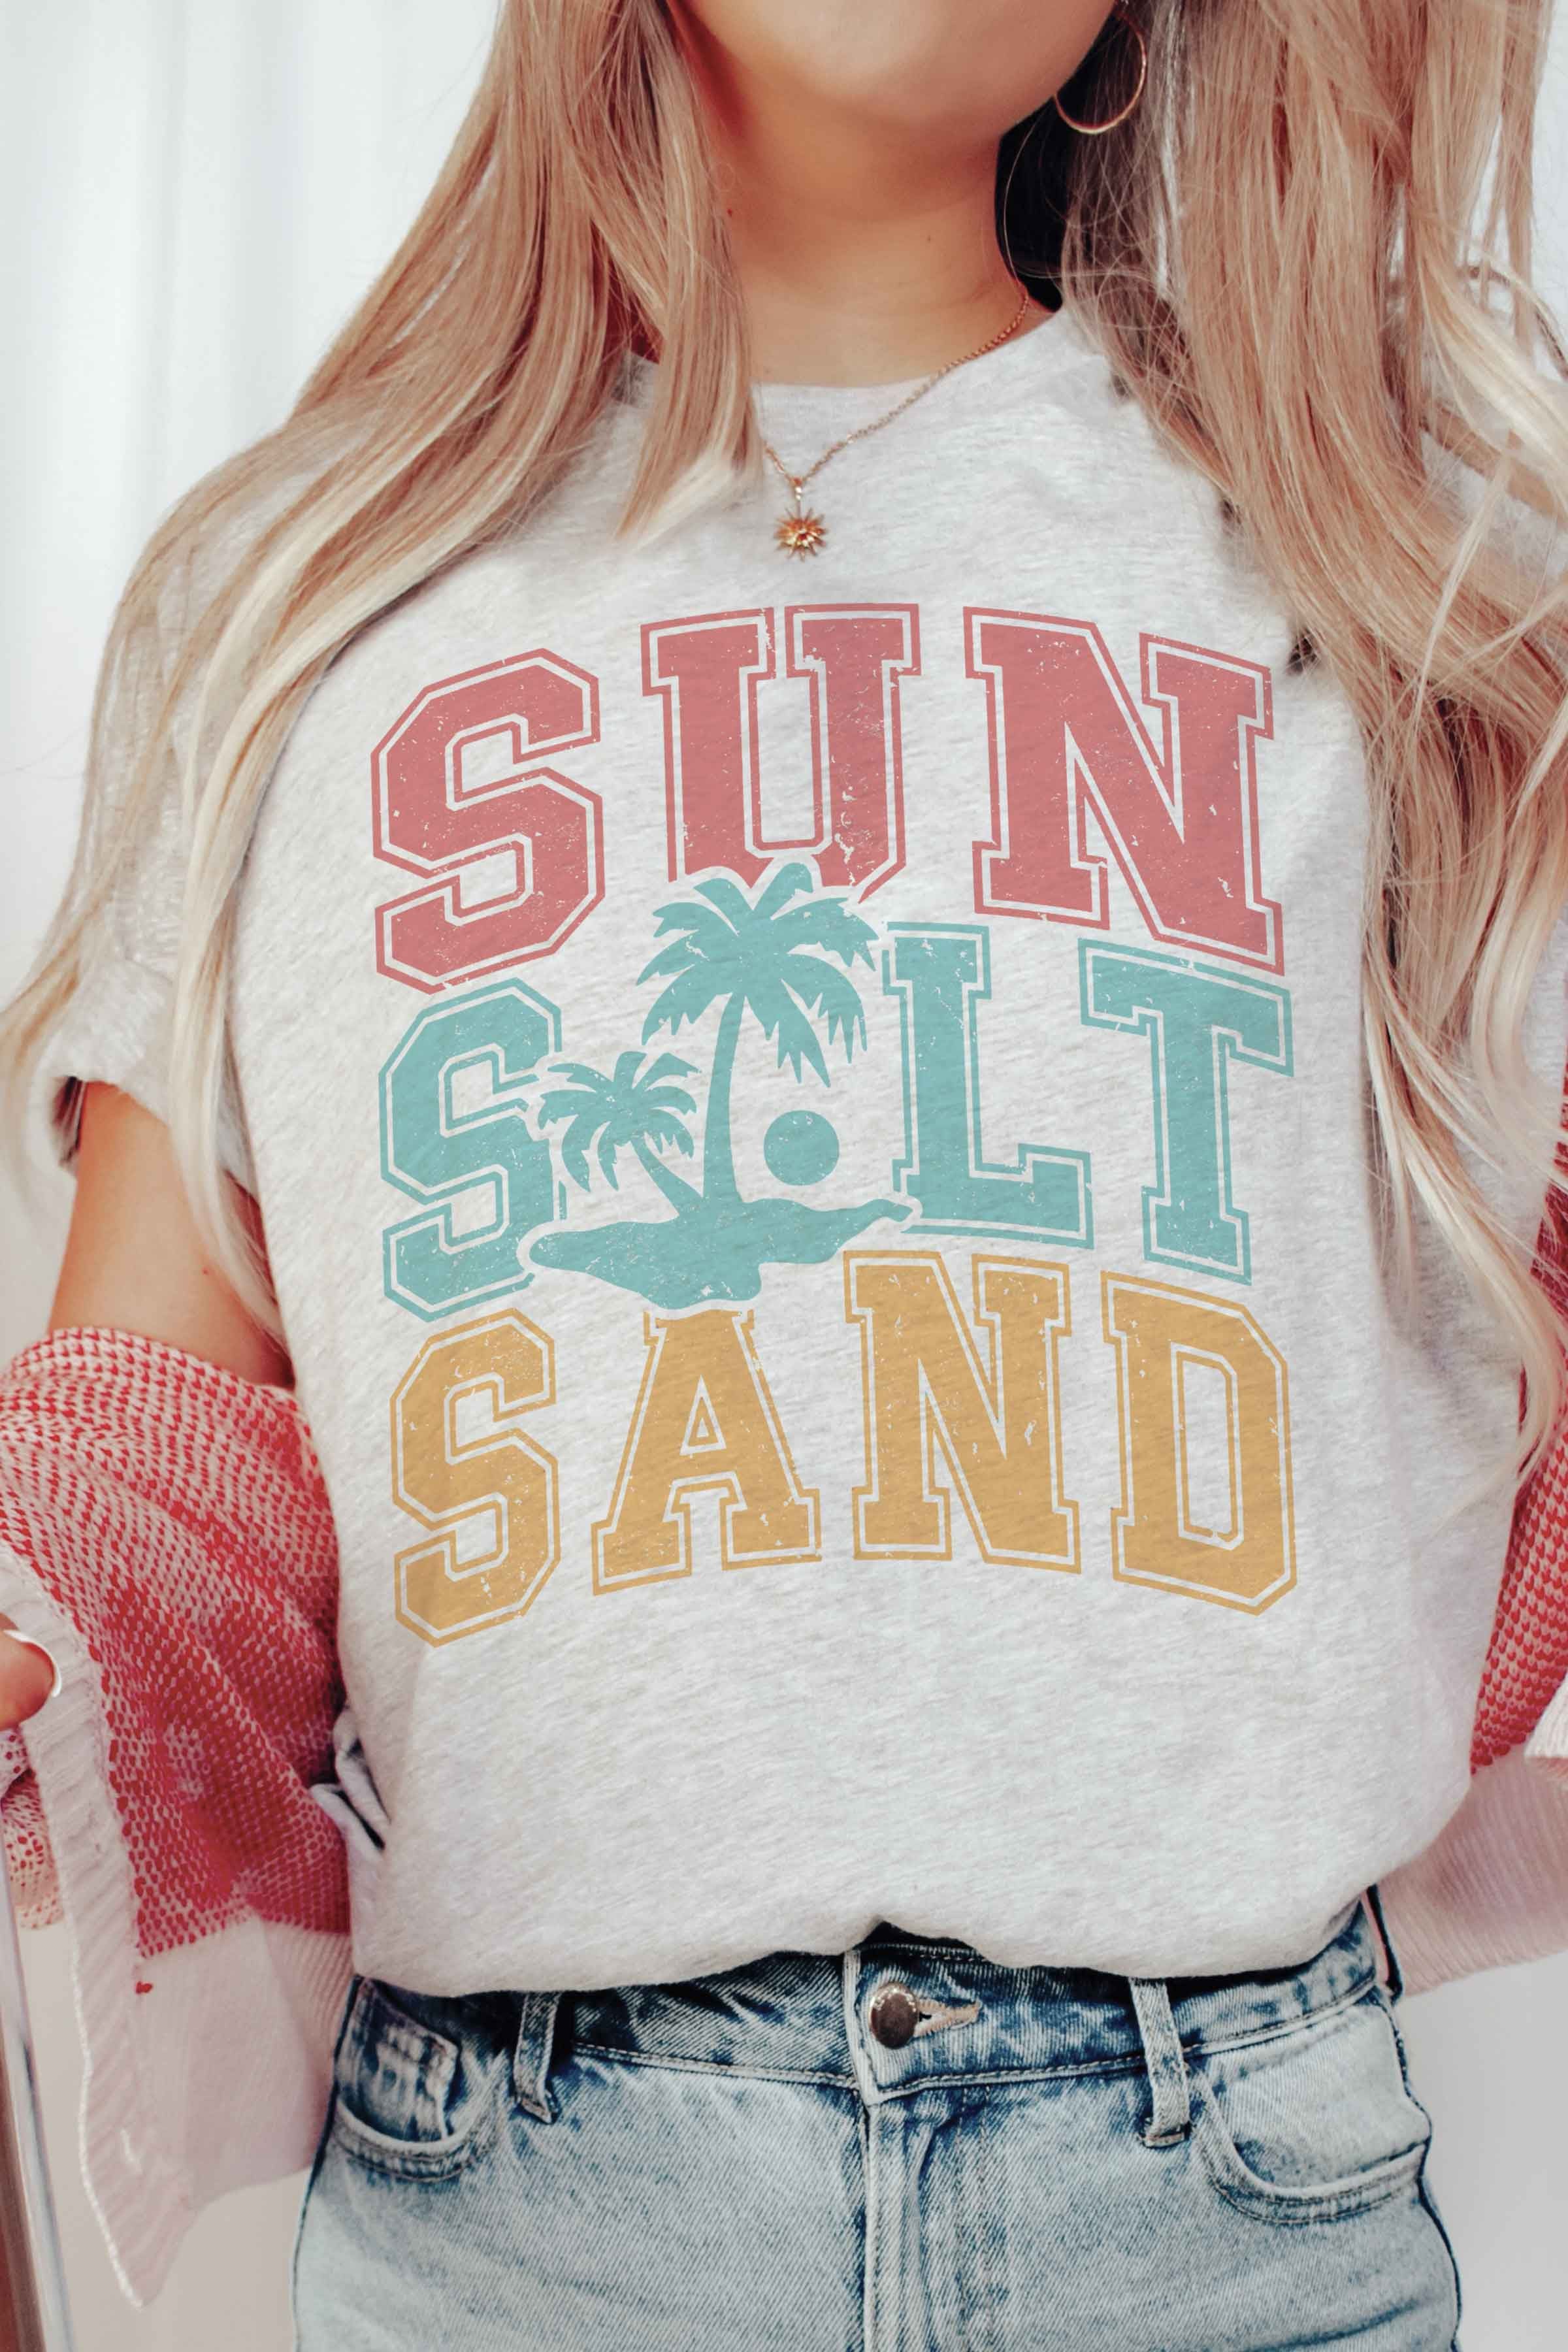 Sun Salt Sand Graphic T-Shirt T-Shirts Cotton Fashion Bravada